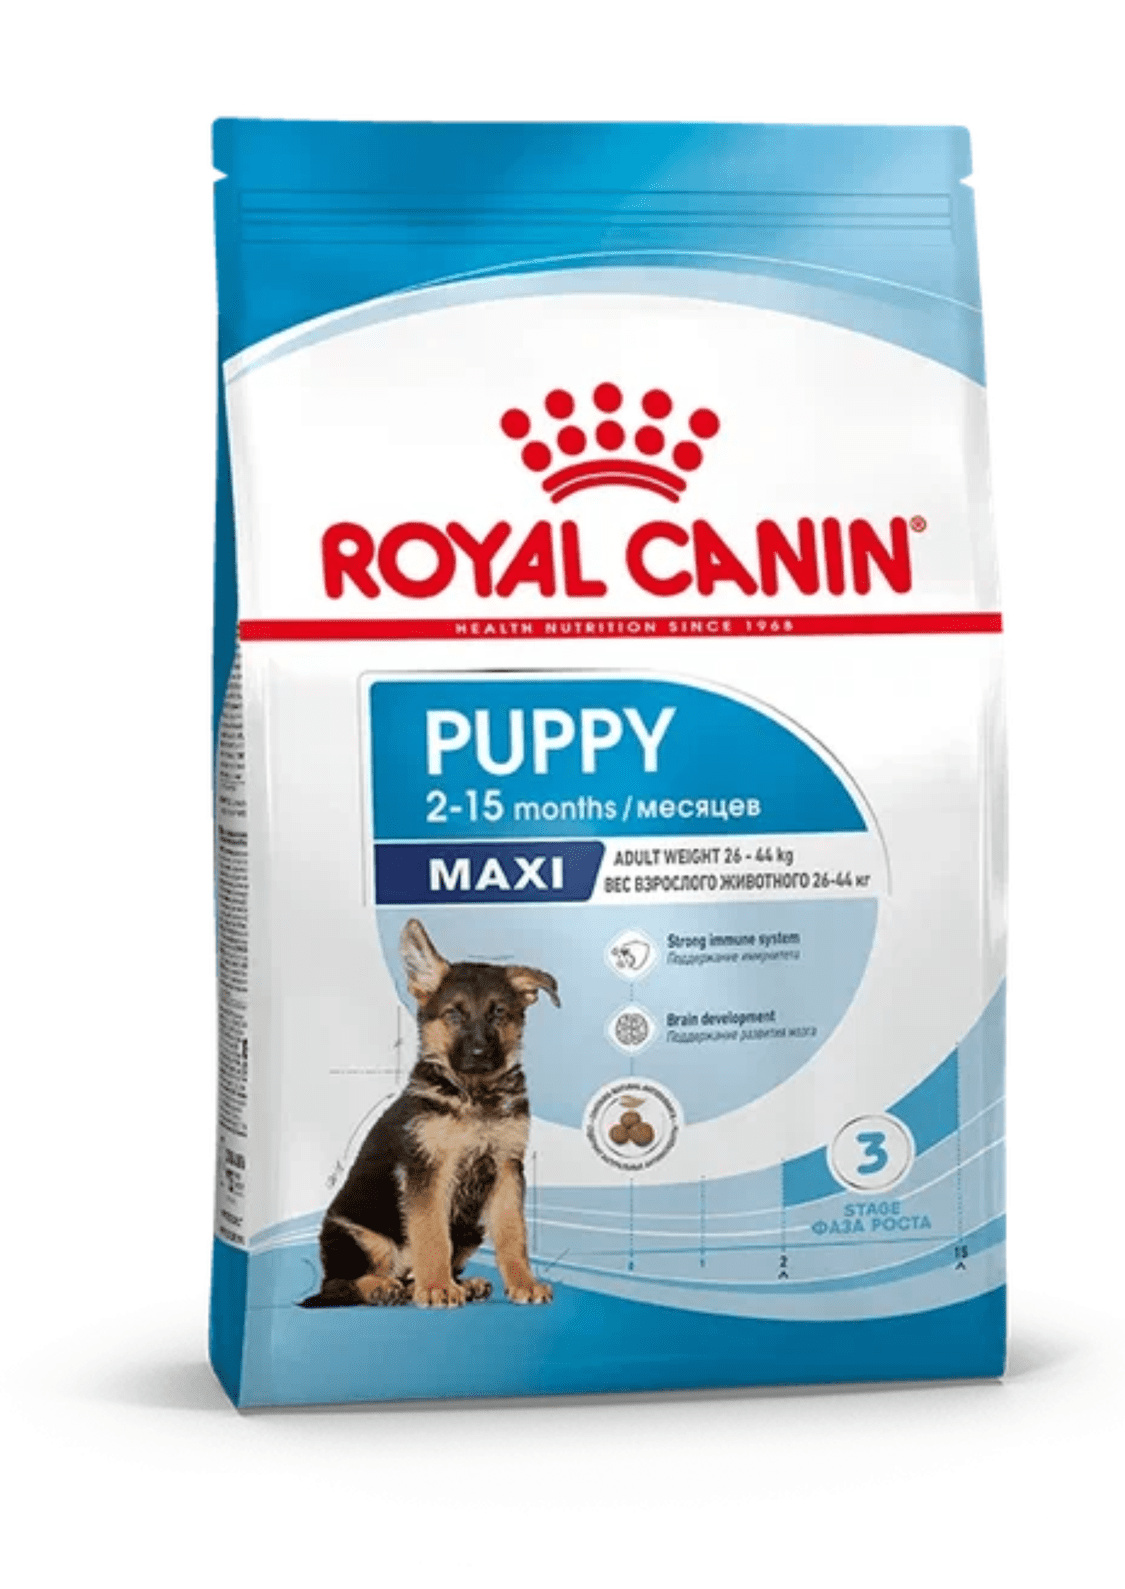 Royal Canin Royal Canin корм сухой для щенков пород крупных размеров (вес 26 - 44 кг) до 15 месяцев (15 кг) корм для щенков royal canin maxi puppy до 15 месяцев 15 кг